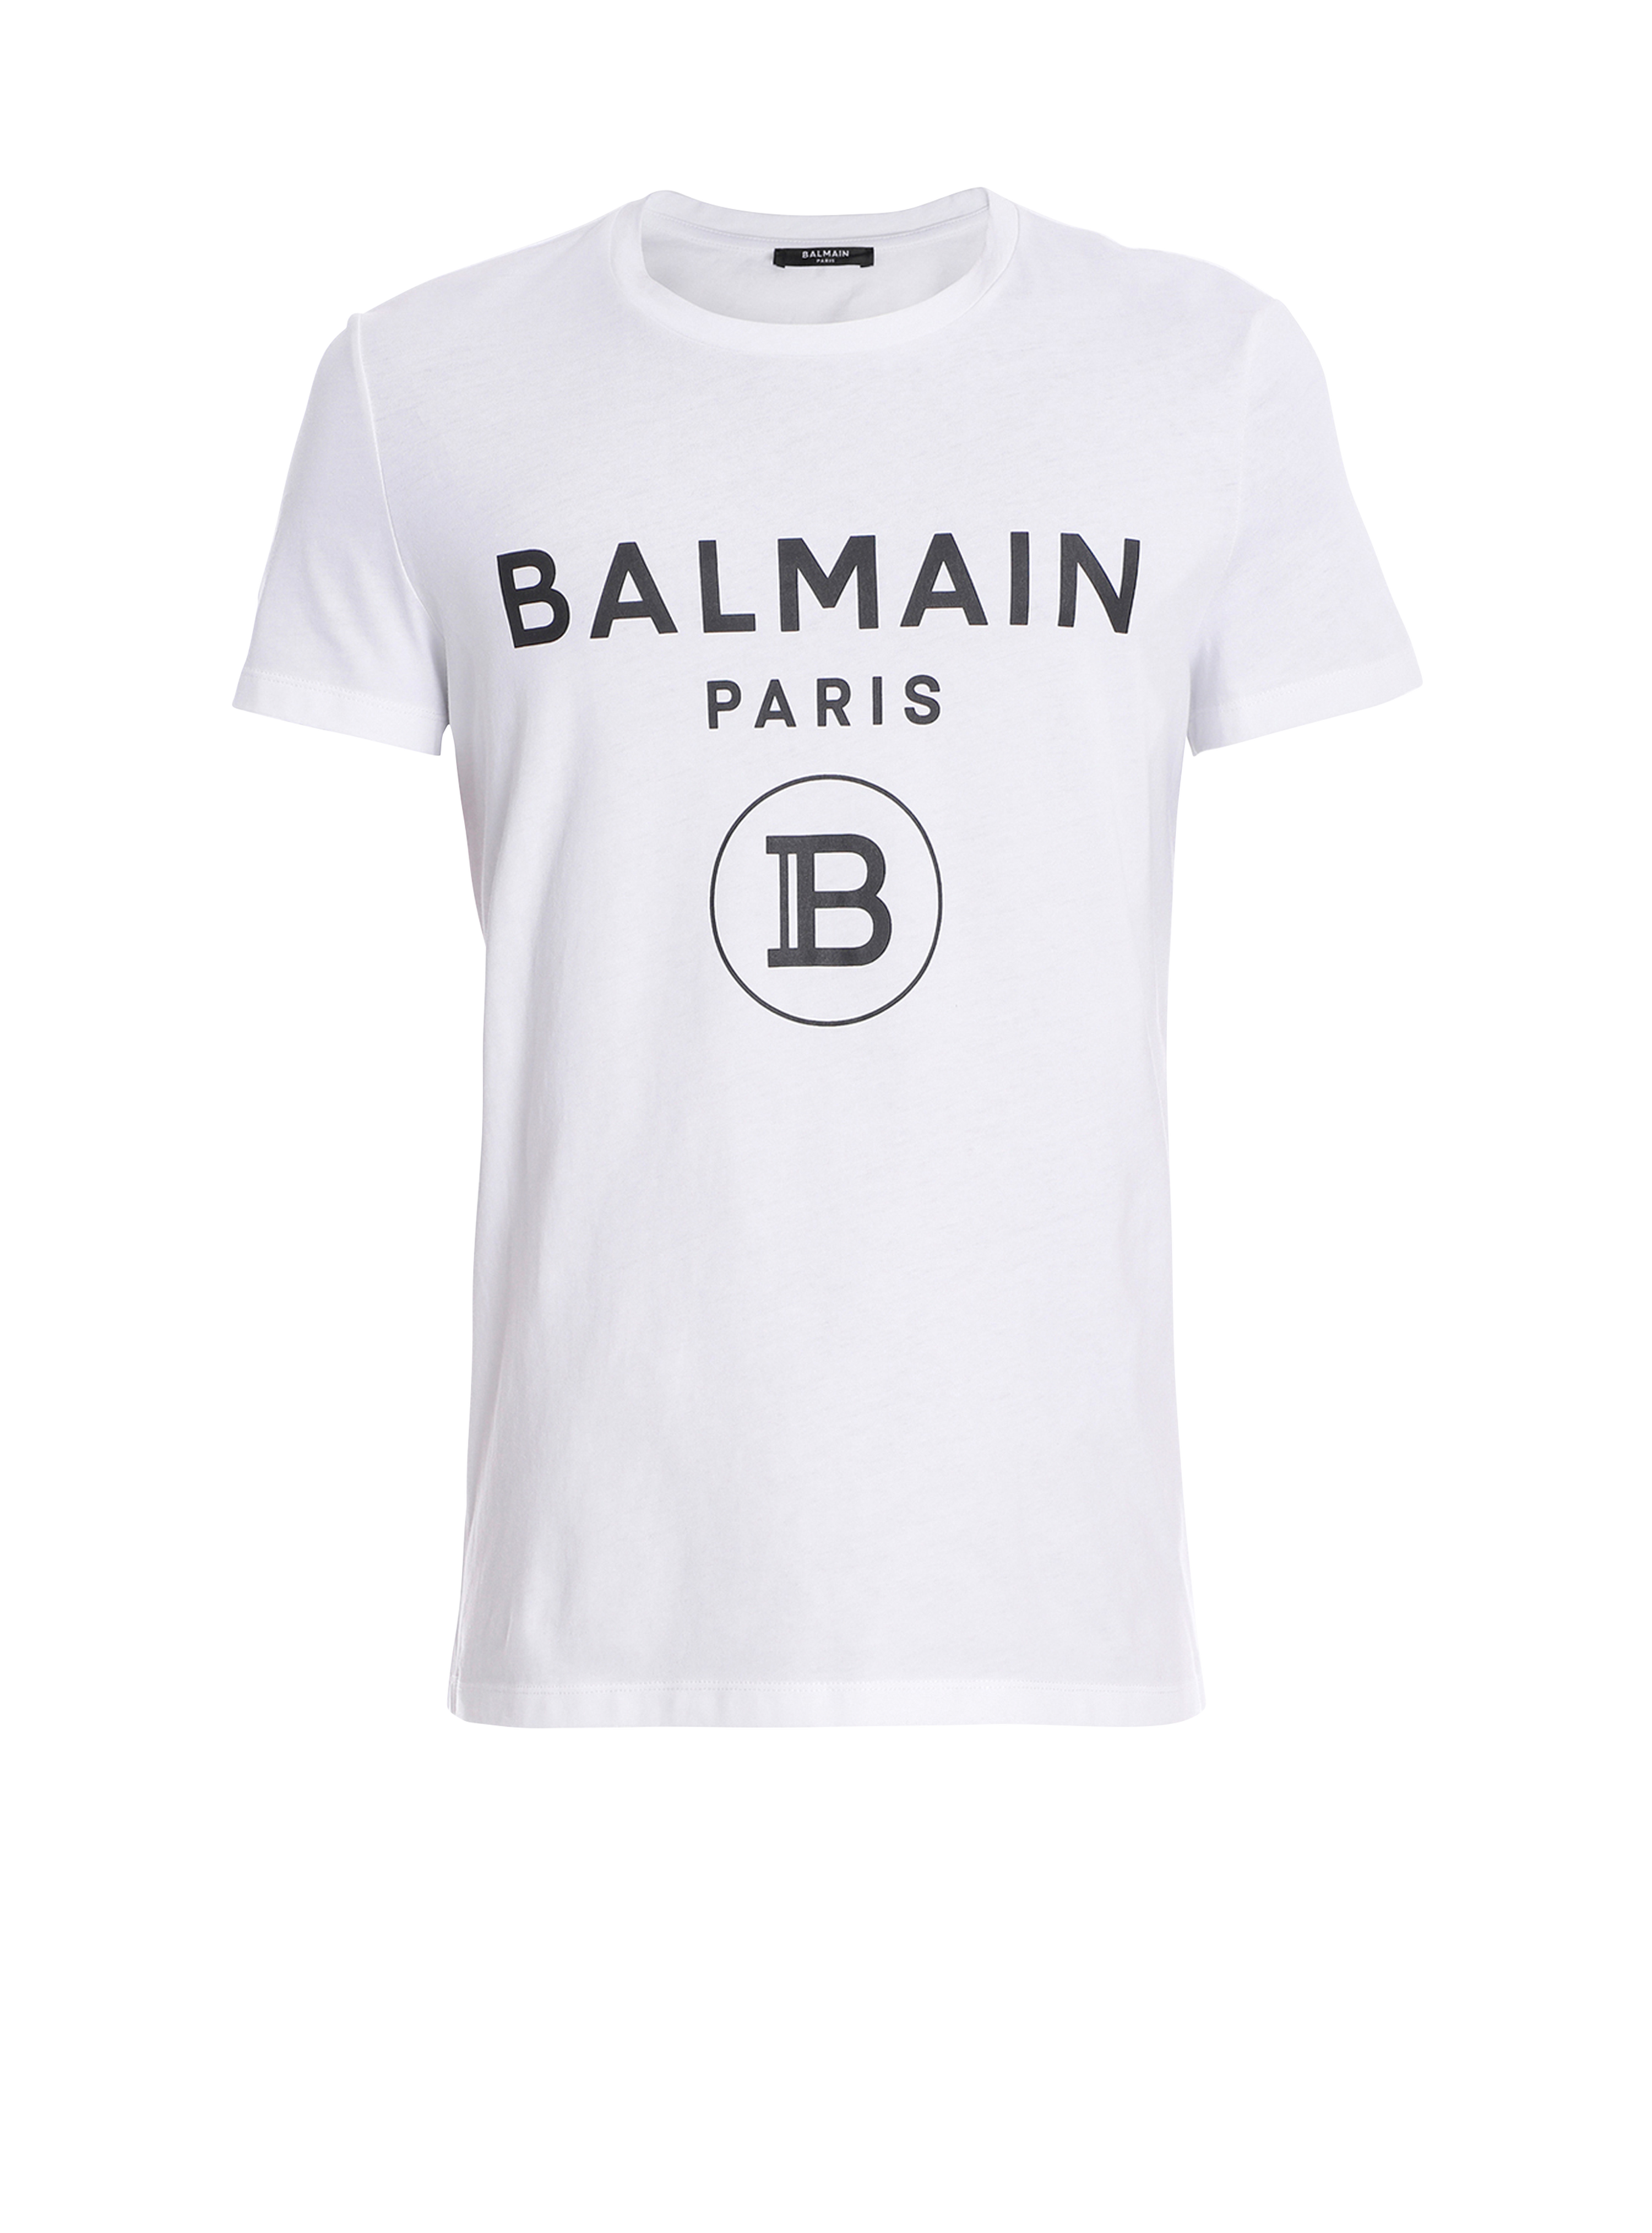 Cotton T-shirt with Balmain Paris logo print, white